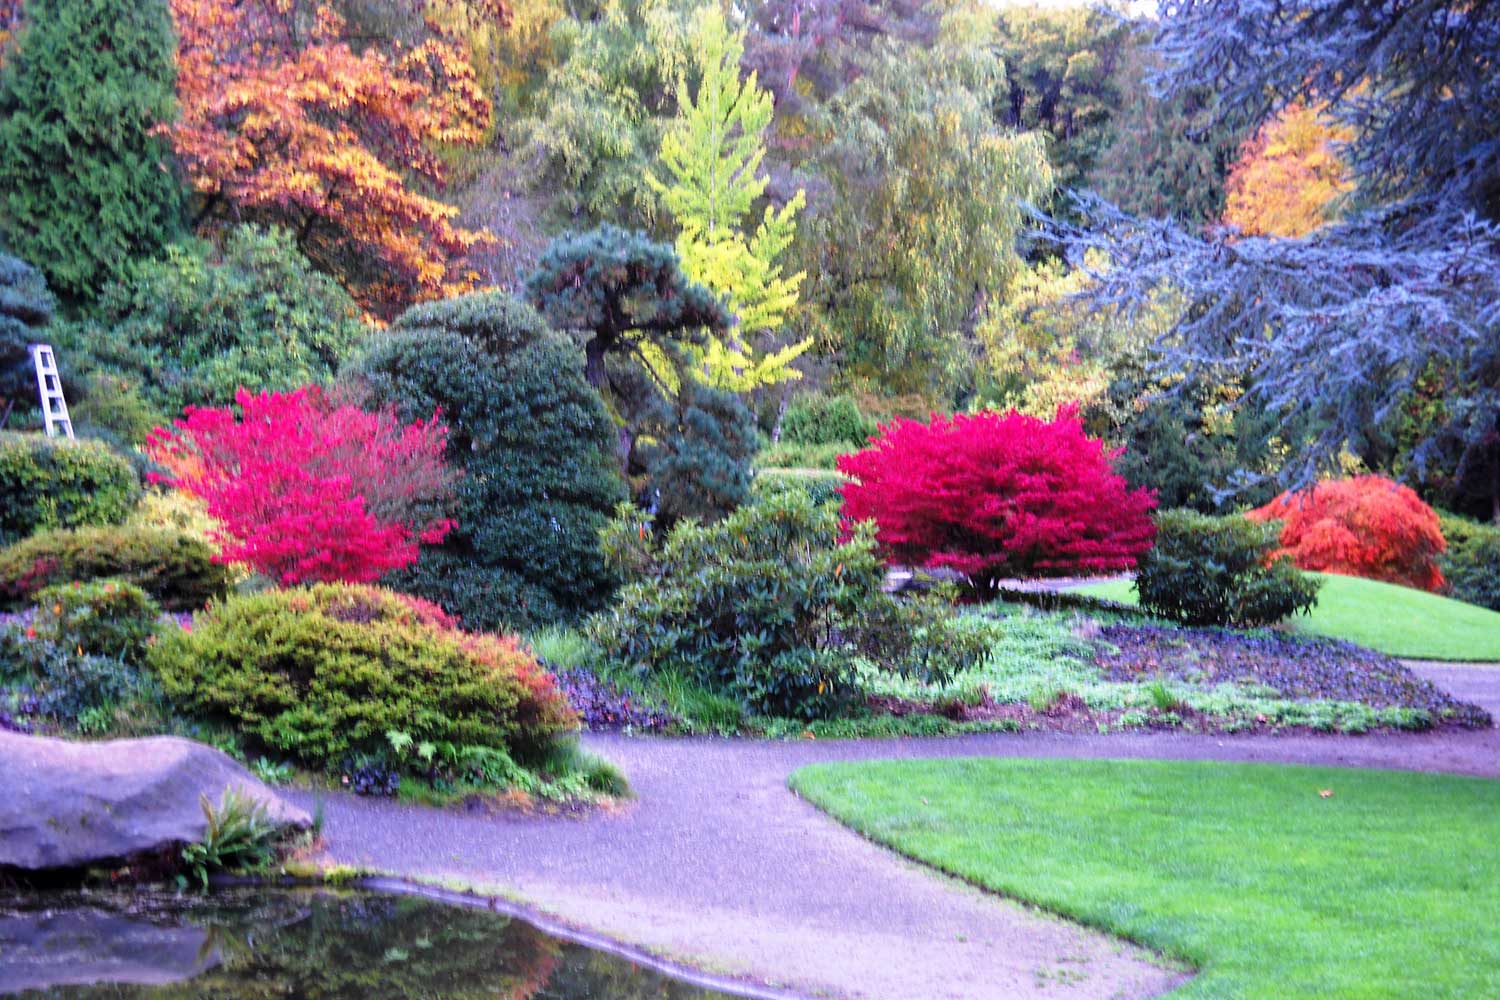 Visit Kubota Garden, a hidden gem in Seattle's Rainier Beach area